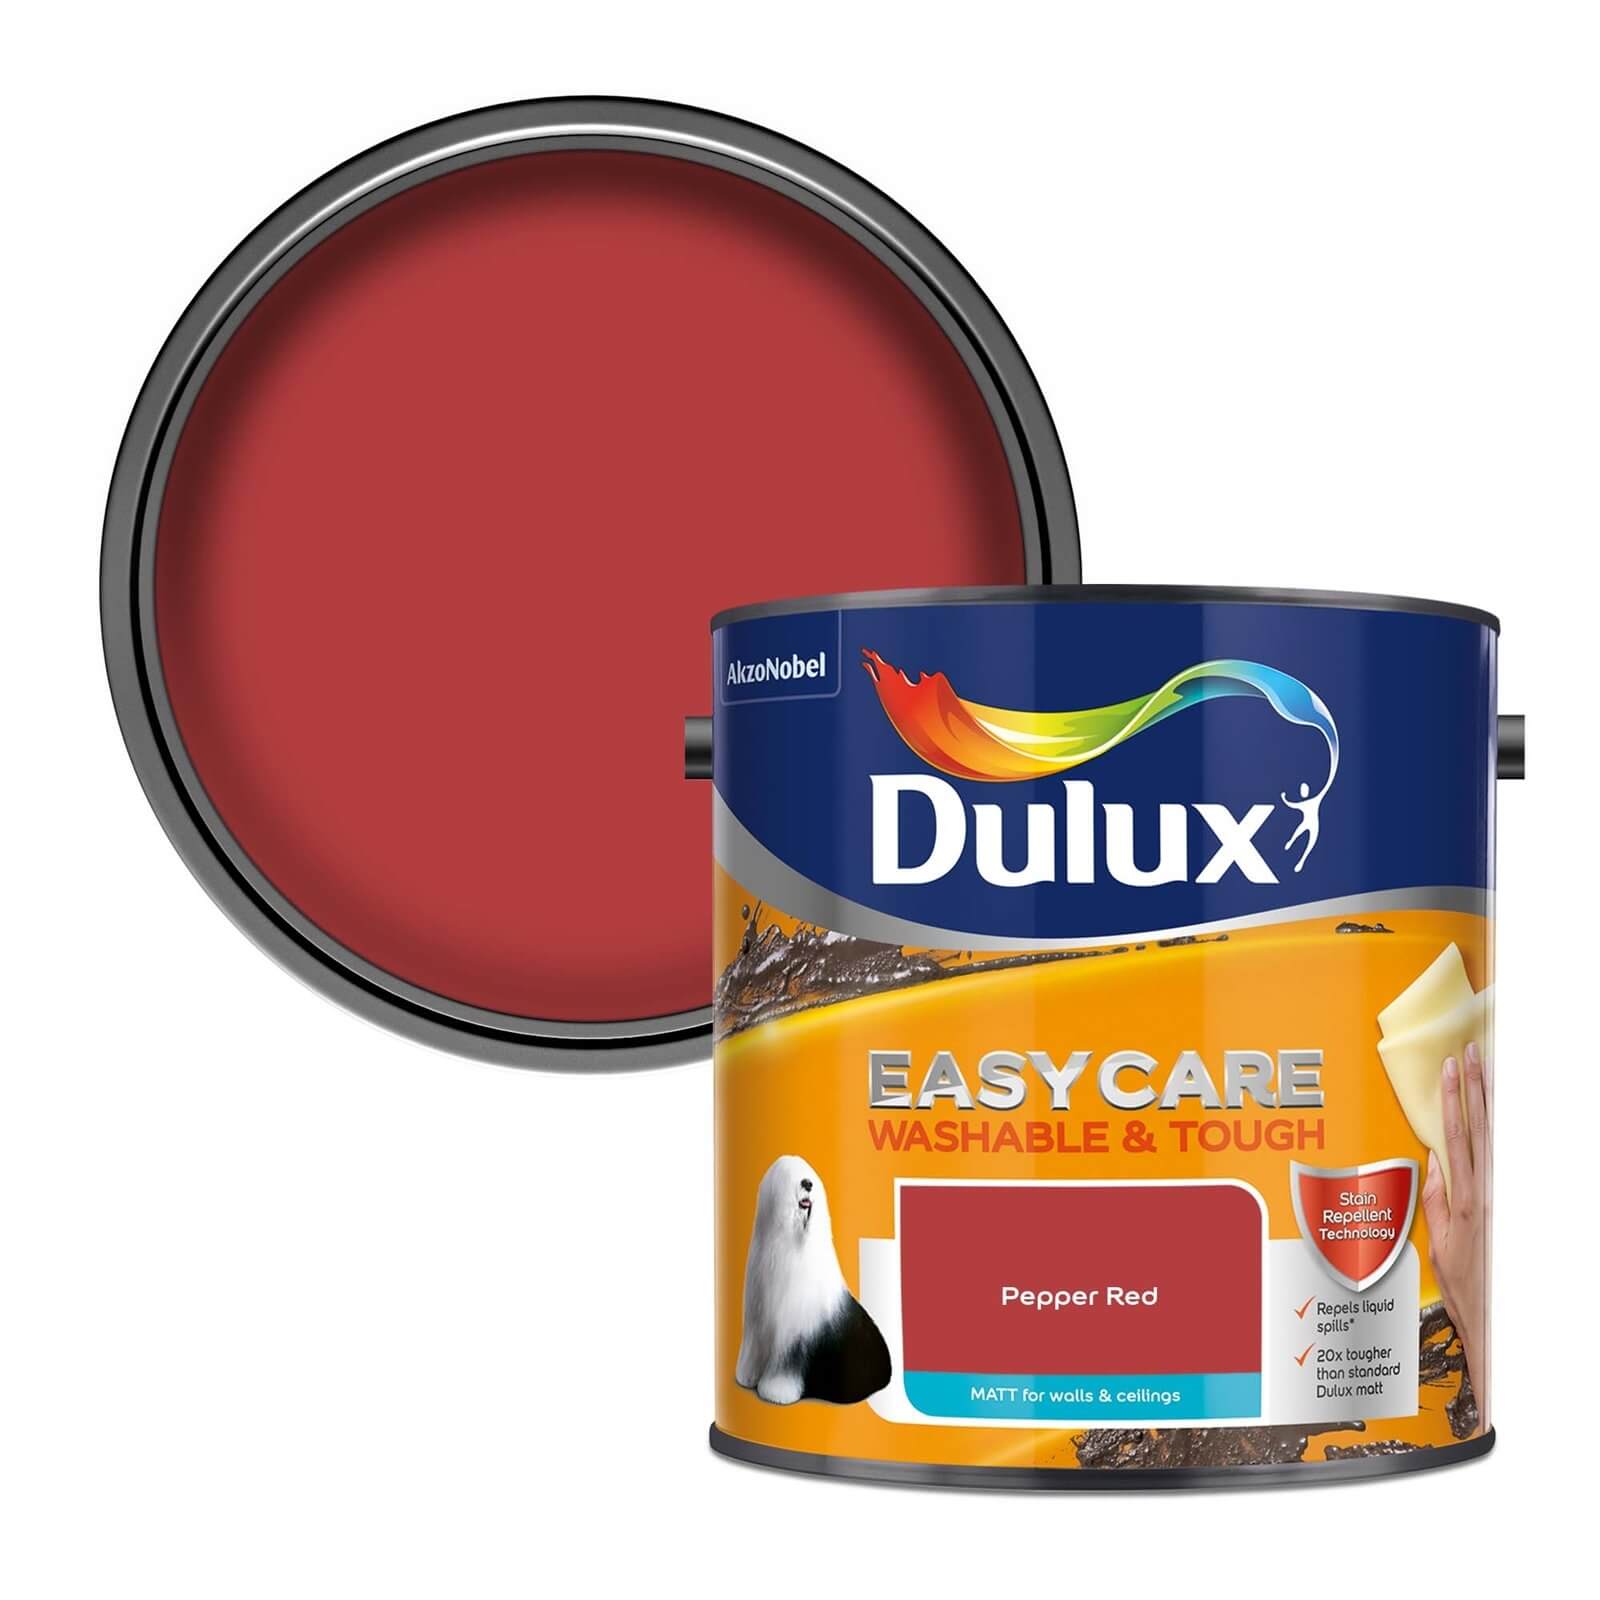 Dulux Easycare Washable & Tough Pepper Red - Matt - 2.5L